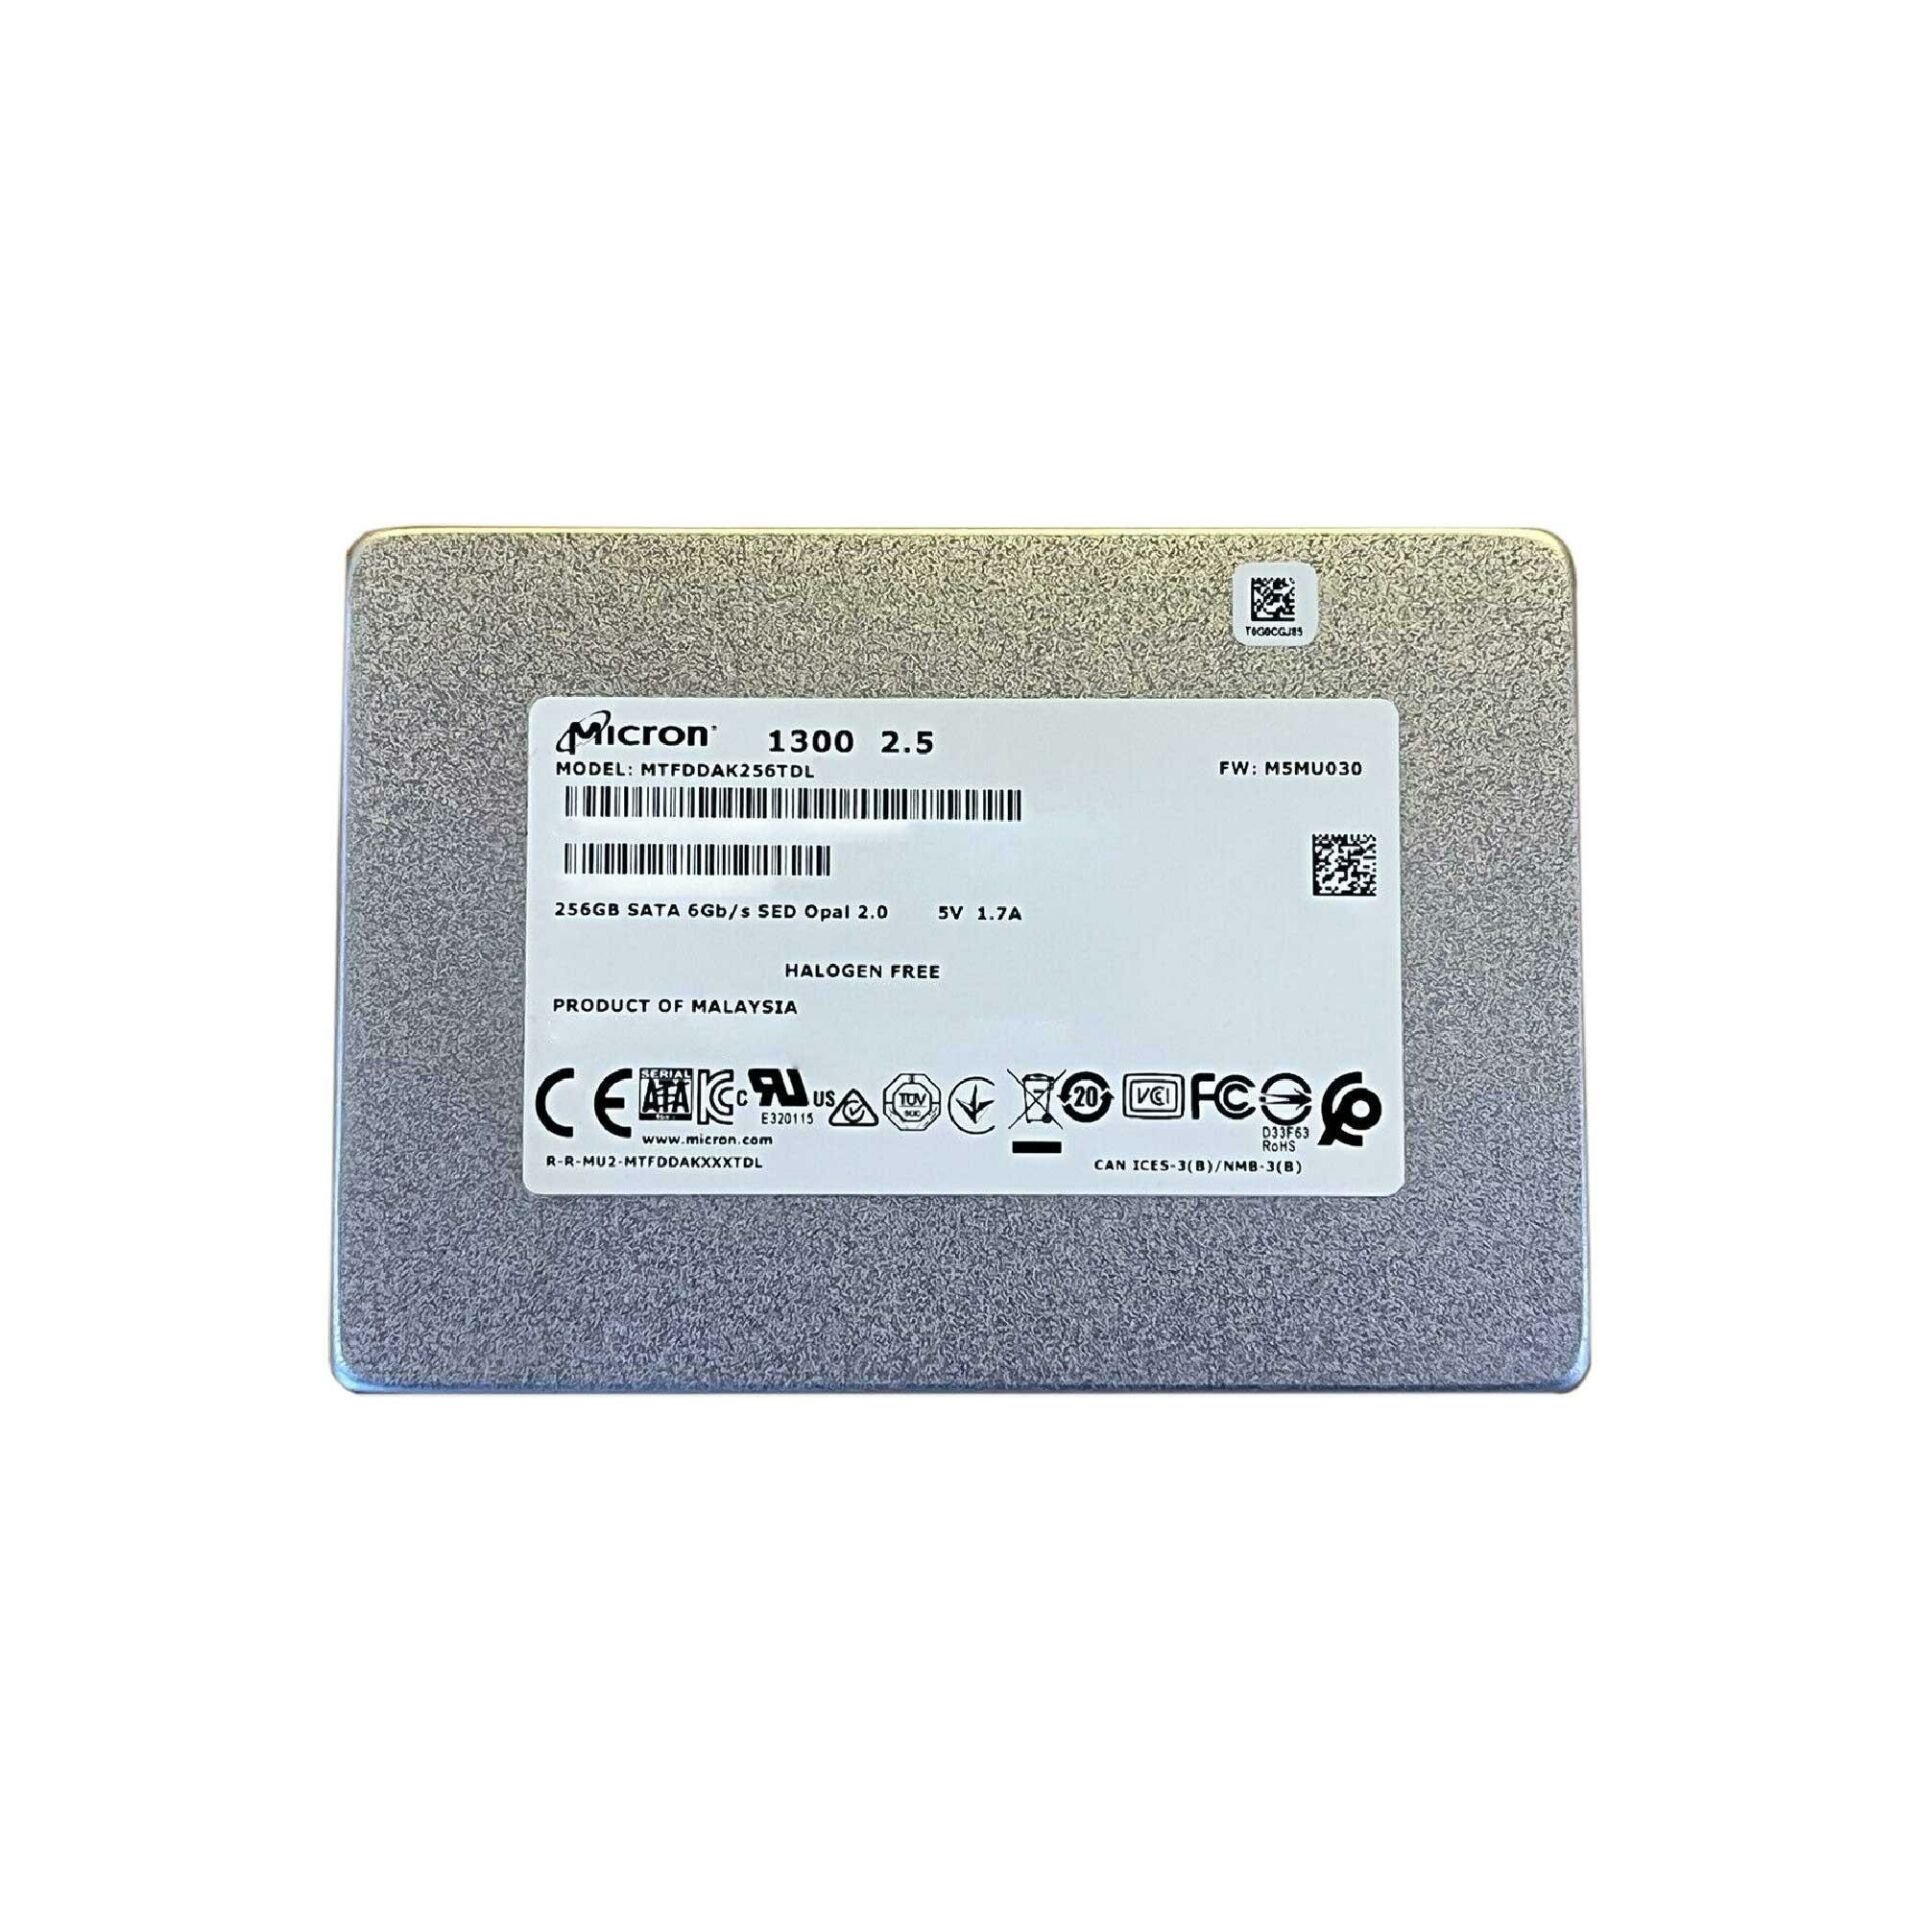 Micron 1300 256GB 2.5'' SATA SSD